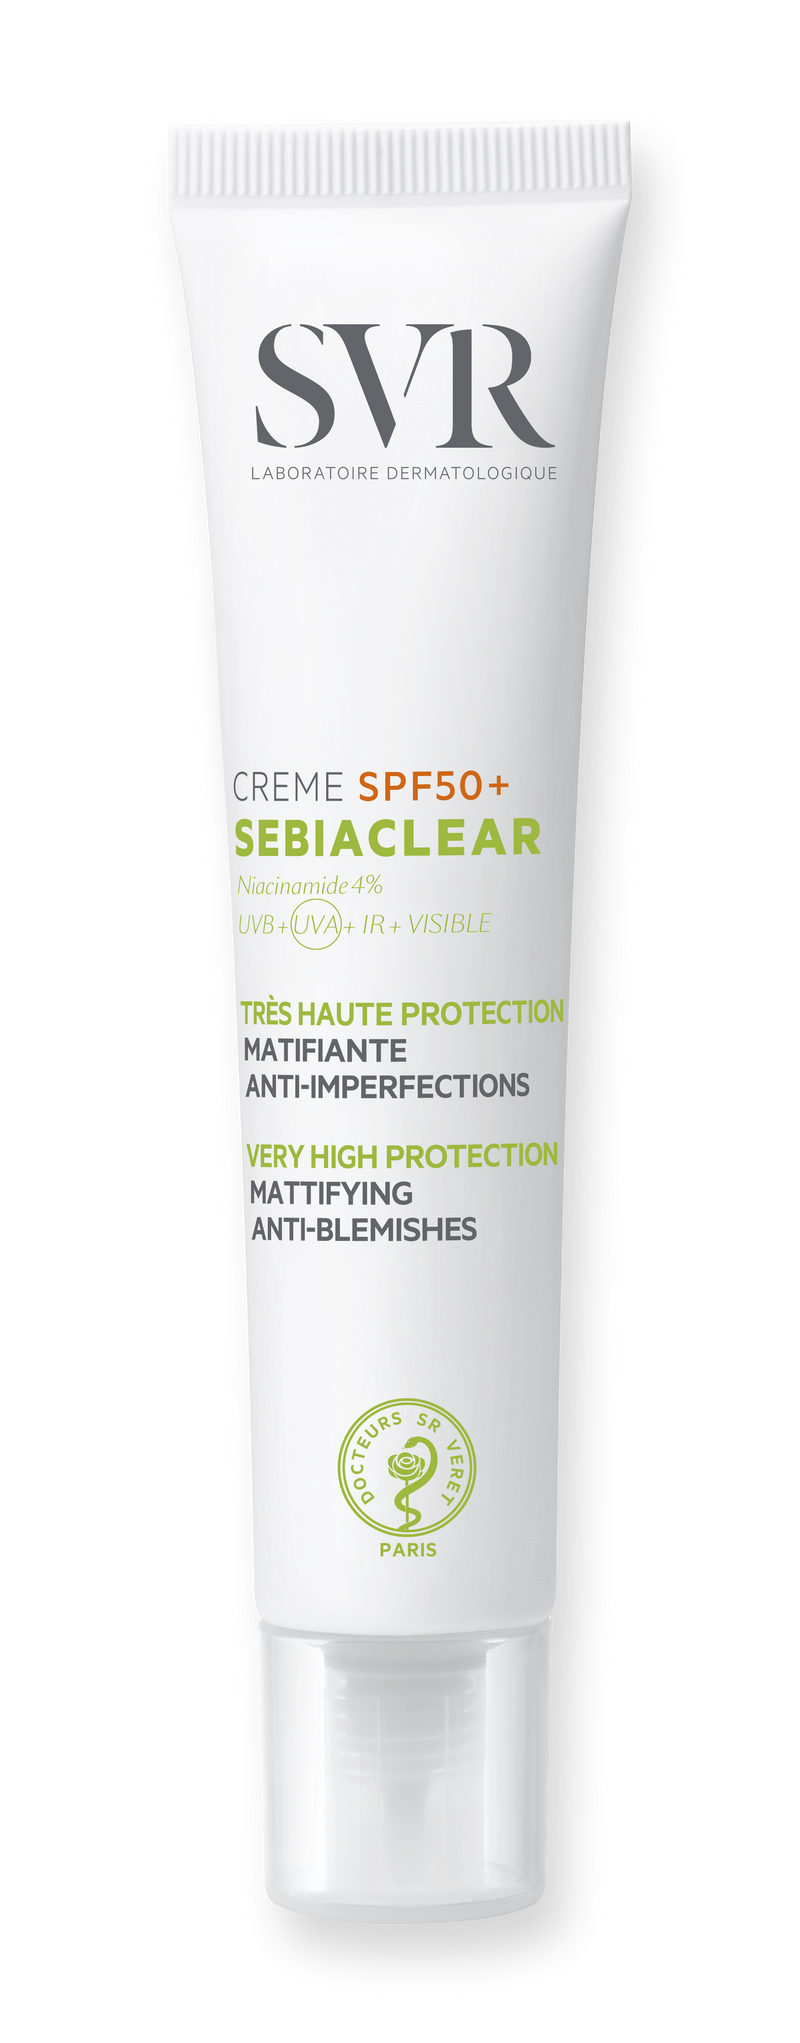 SVR Sebiaclear Creme Protect SPF50+ 40ml - Farmácia Garcia